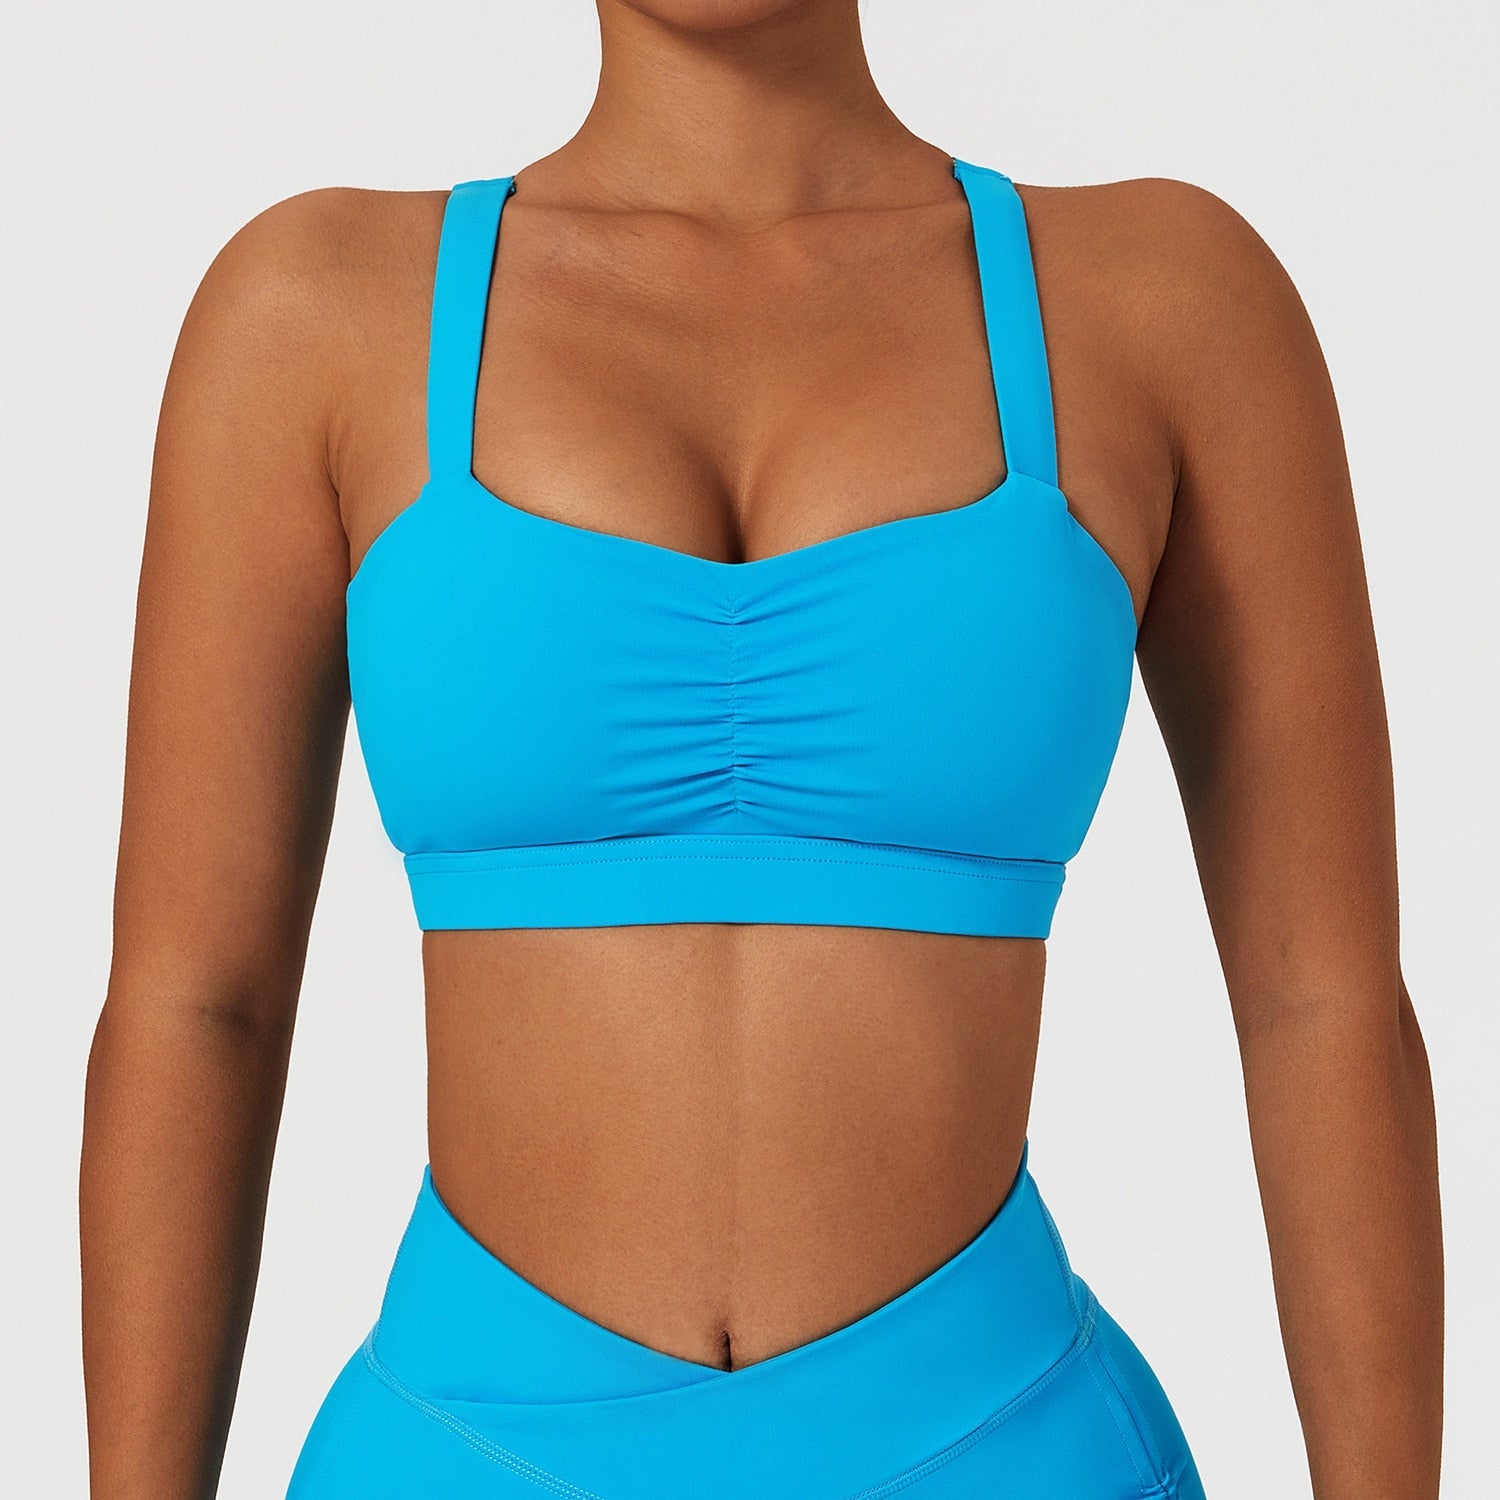 New Fitness Sports Bra for Women Push Up Beautiful Back Crisscross Strappy Running Gym Training Workout Yoga Underwear Crop Tops blueChinaXL  59.99 EZYSELLA SHOP